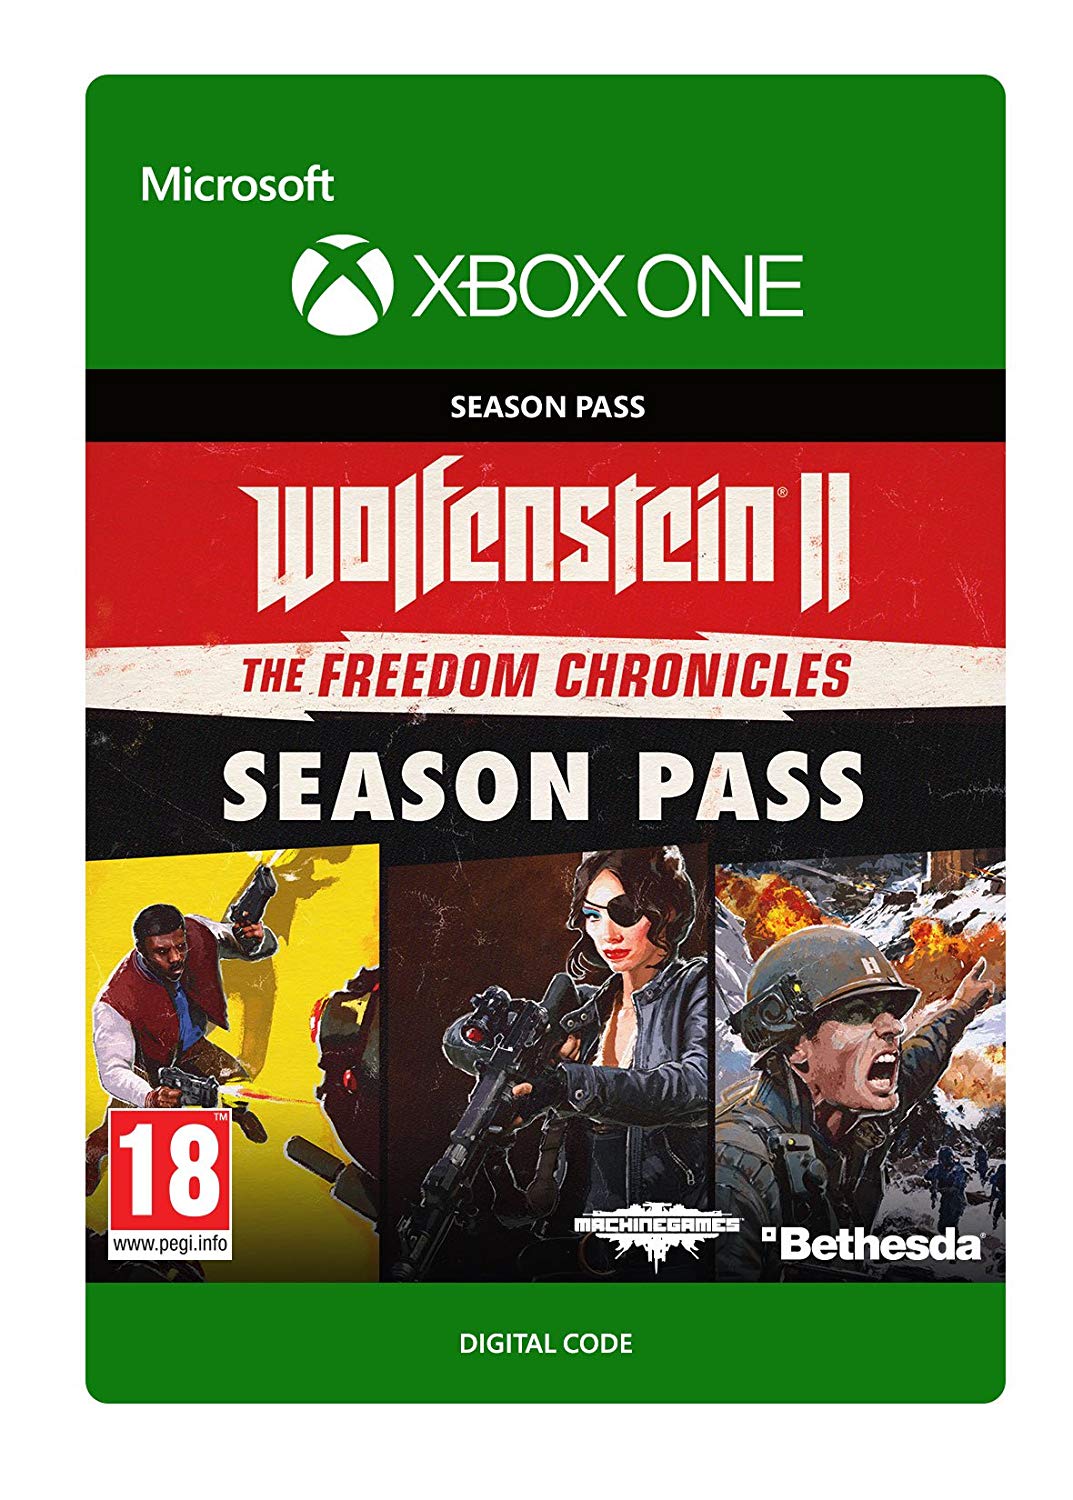 Wolfenstein II: The New Colossus - Freedom Chronicles Season Pass Digital Copy CD Key (Xbox One): GLOBAL (works worldwide)